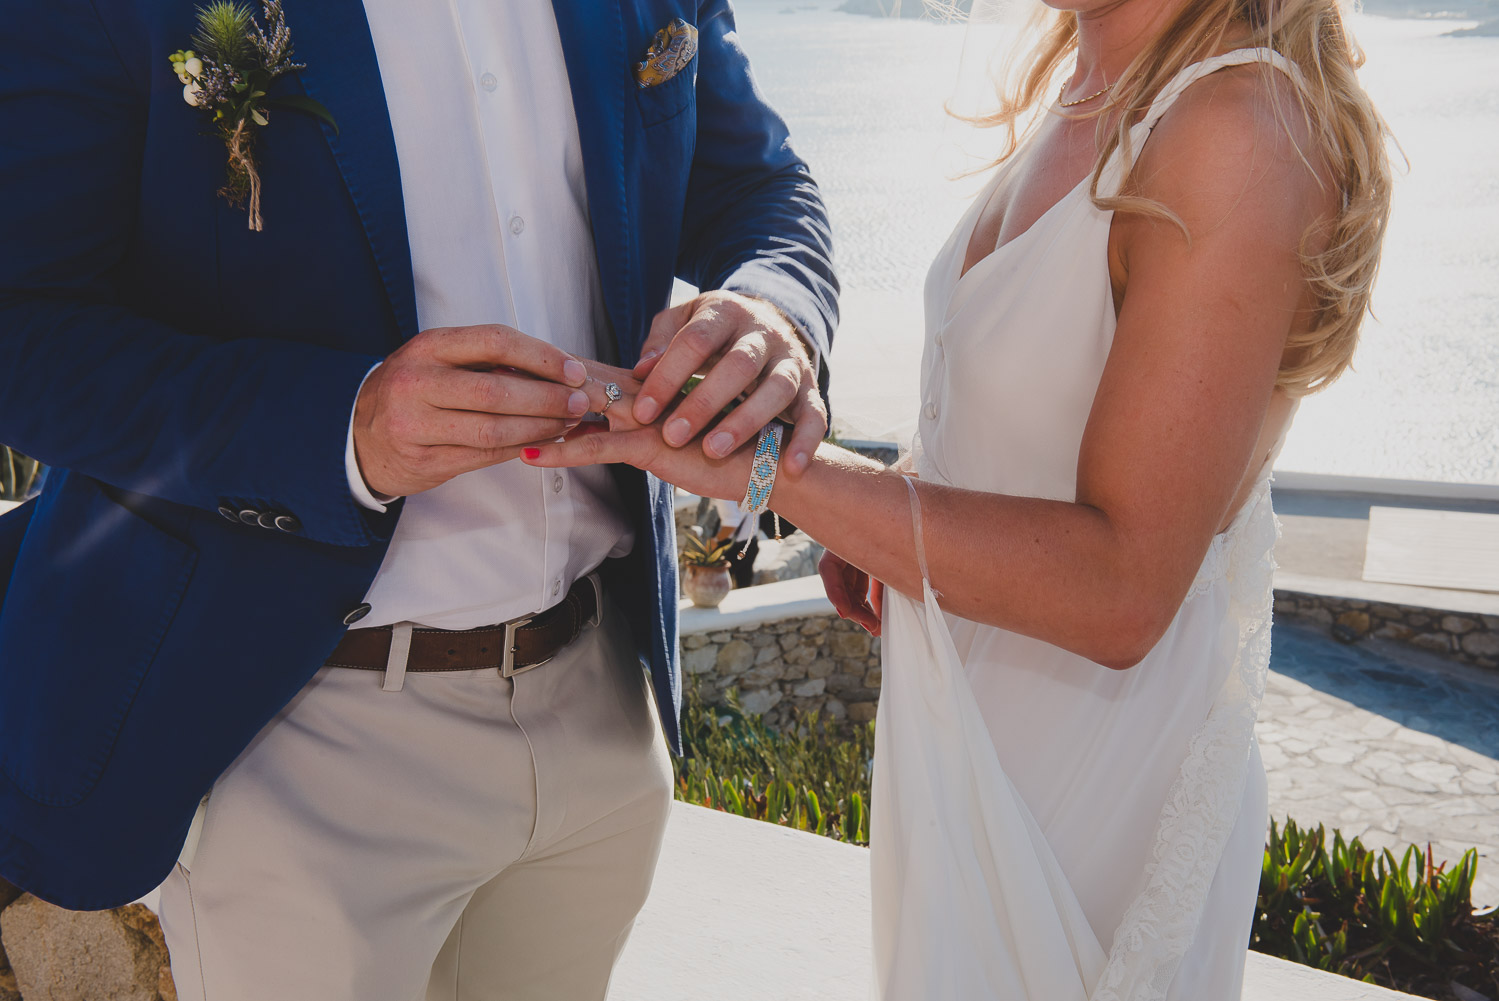 Wedding photographer Mykonos: close up of ring exchange during Mykonos wedding.